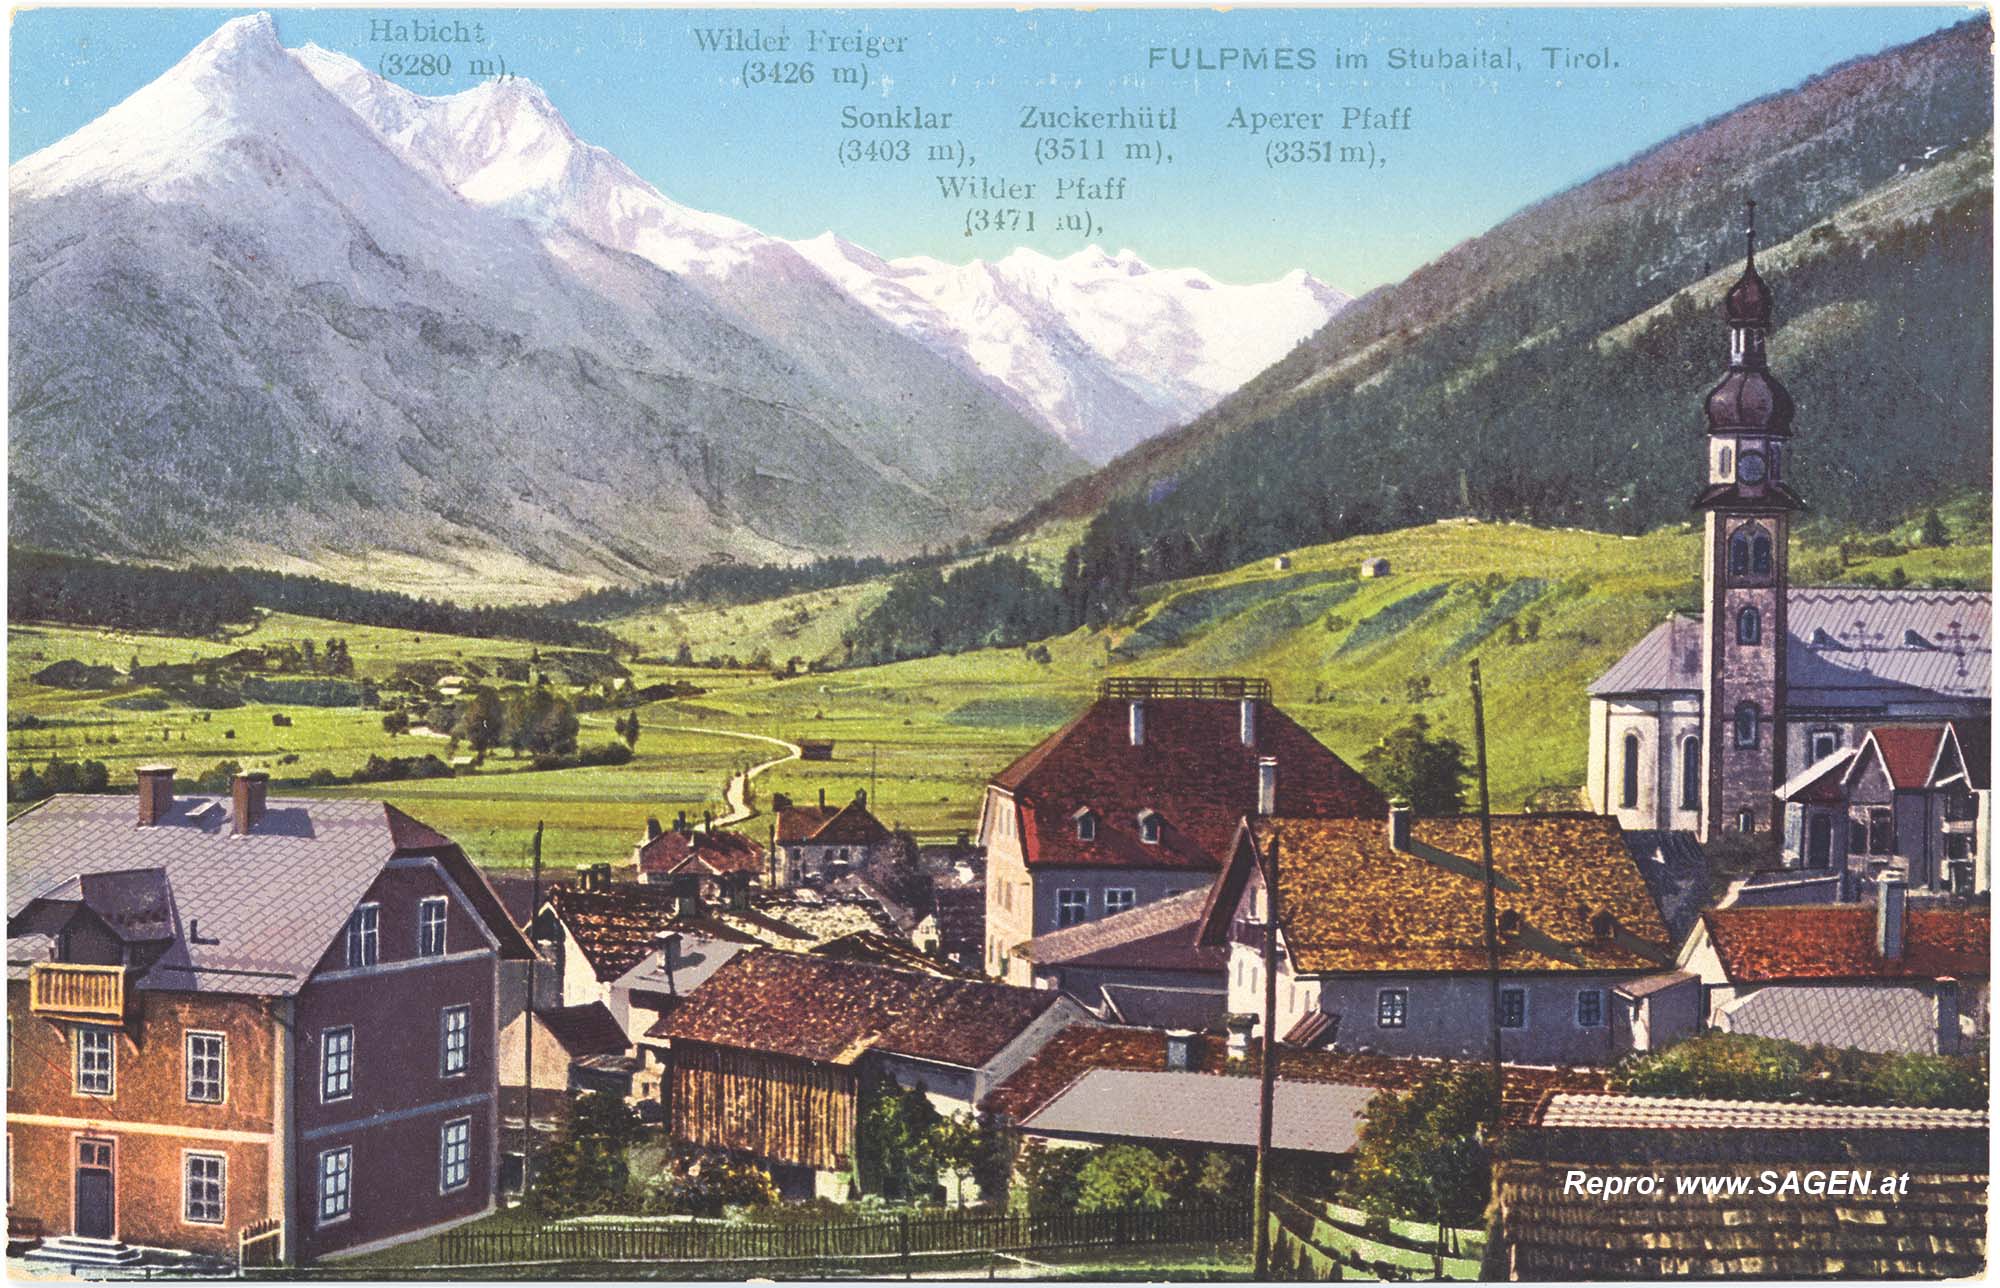 Fulpmes im Stubaital, Tirol